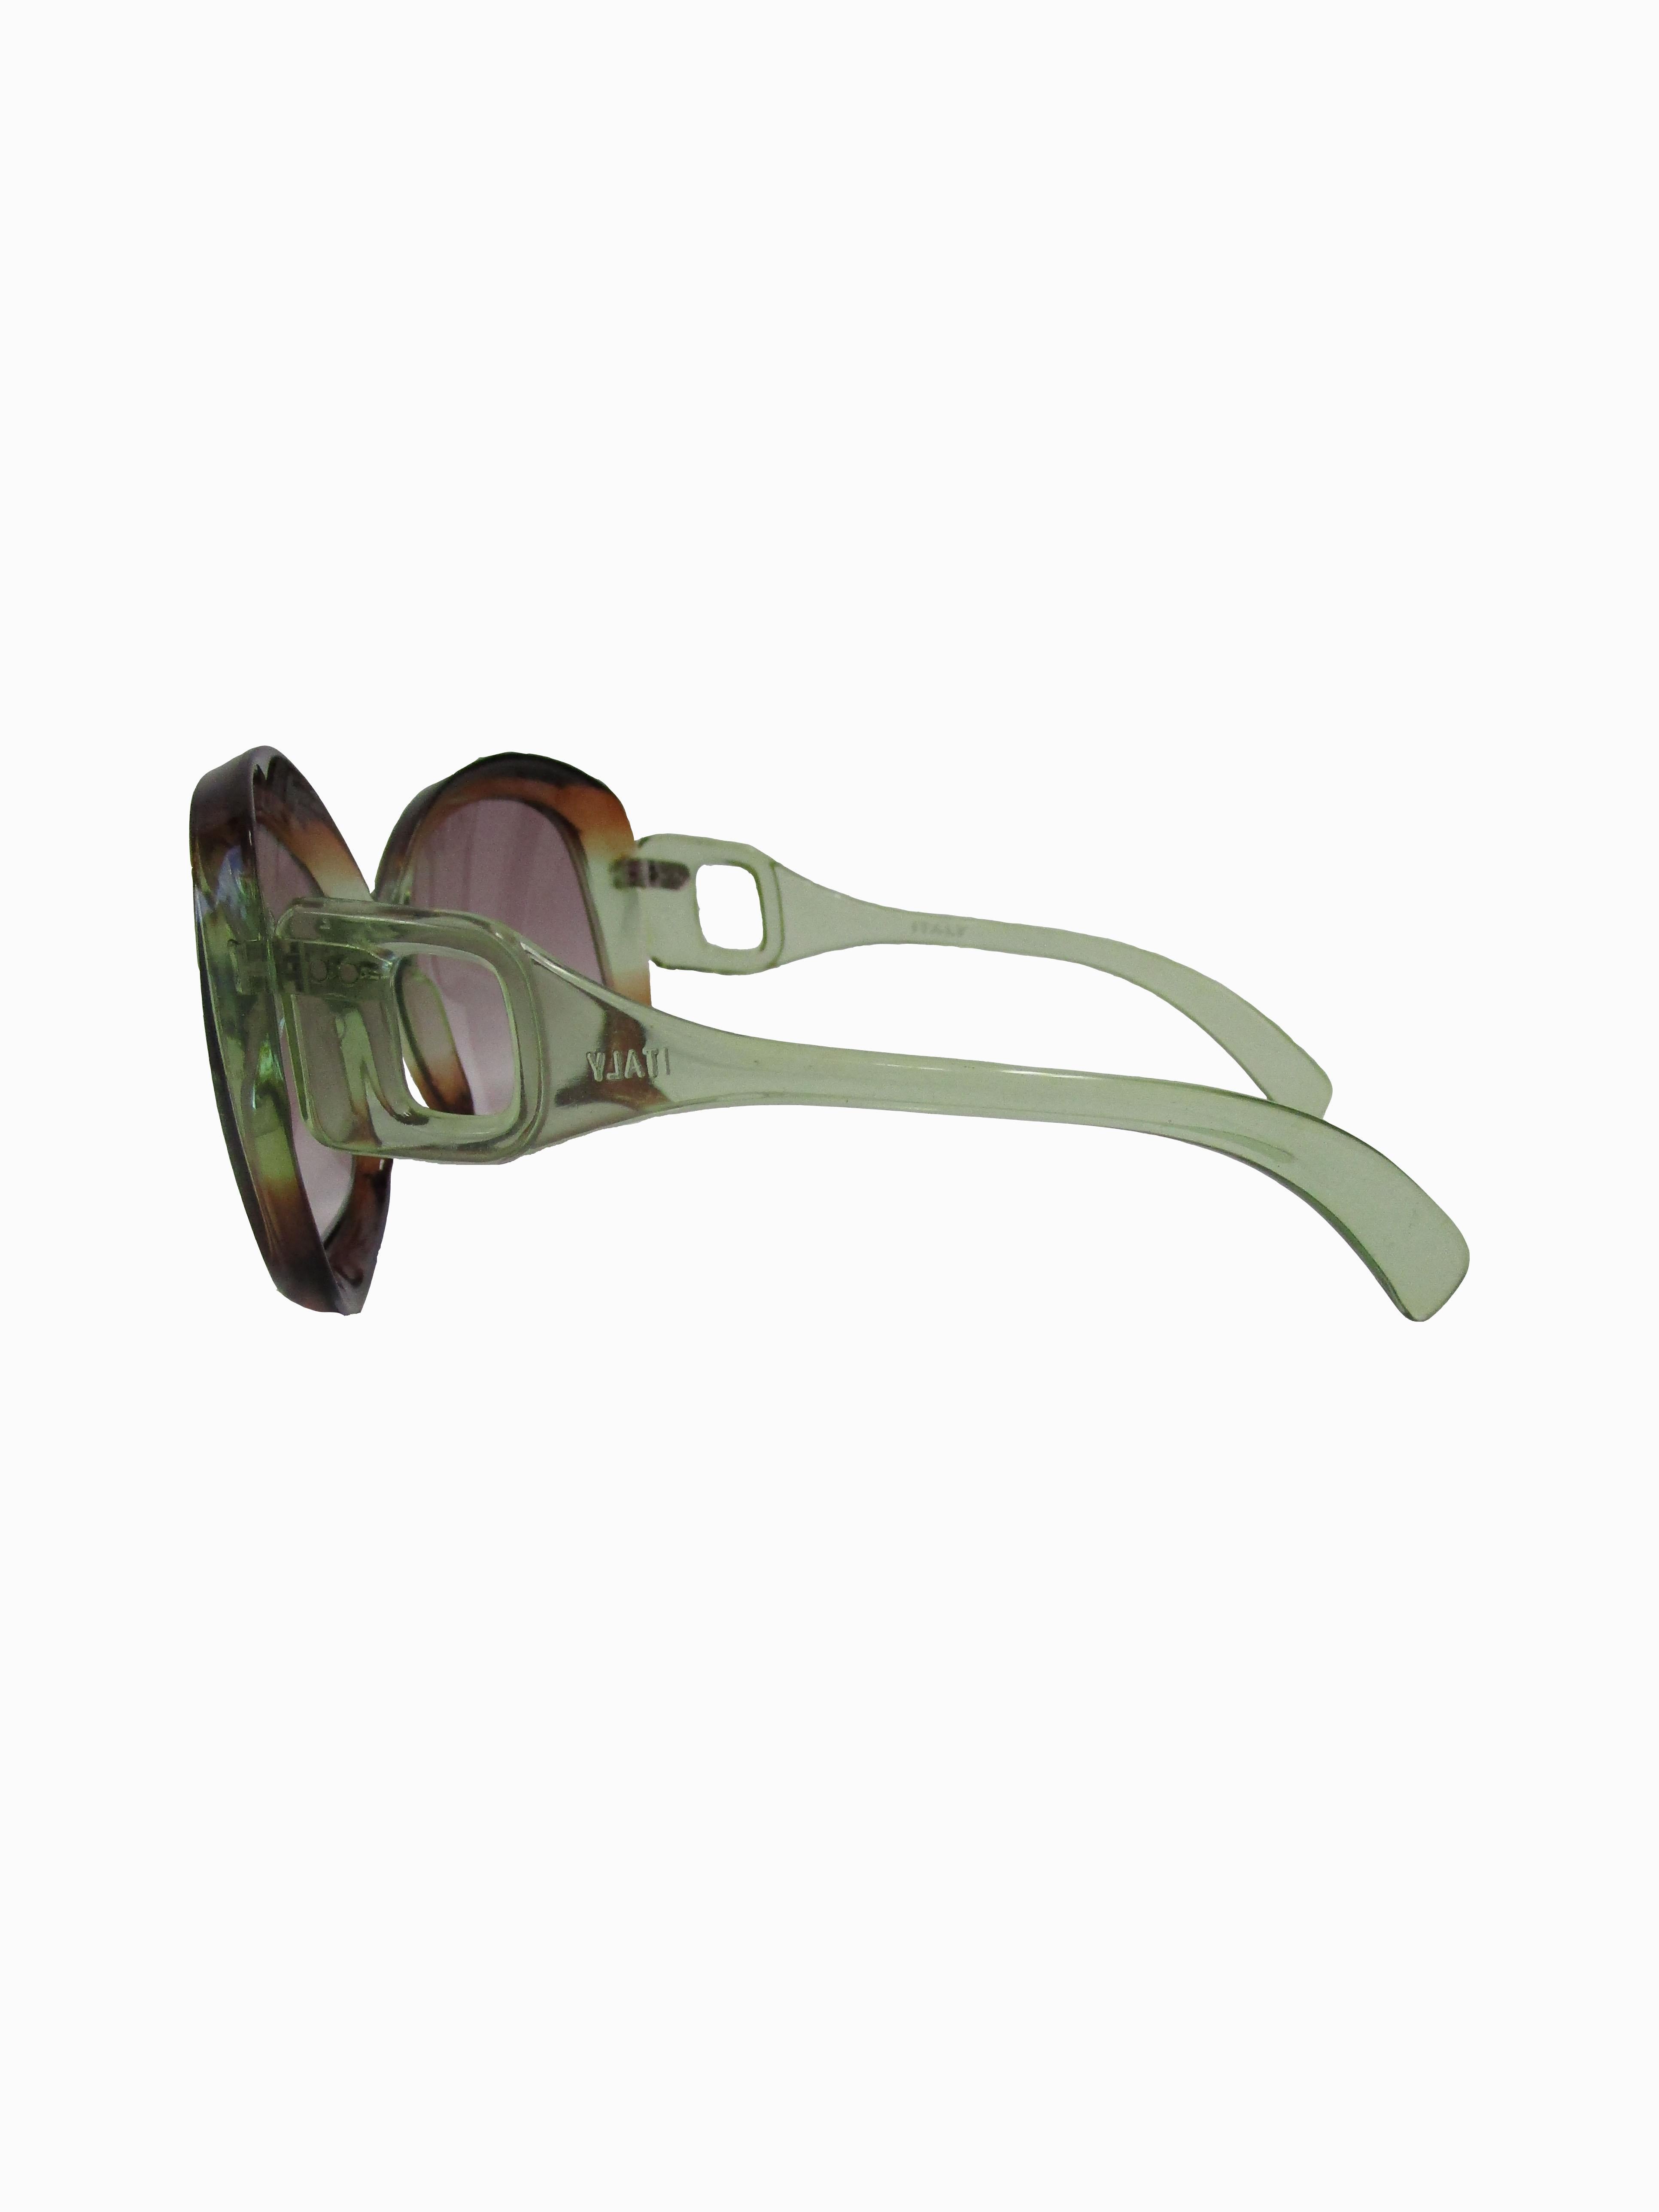 Women's 70s Italian Mod Green to Brown Ombre Sunglasses 